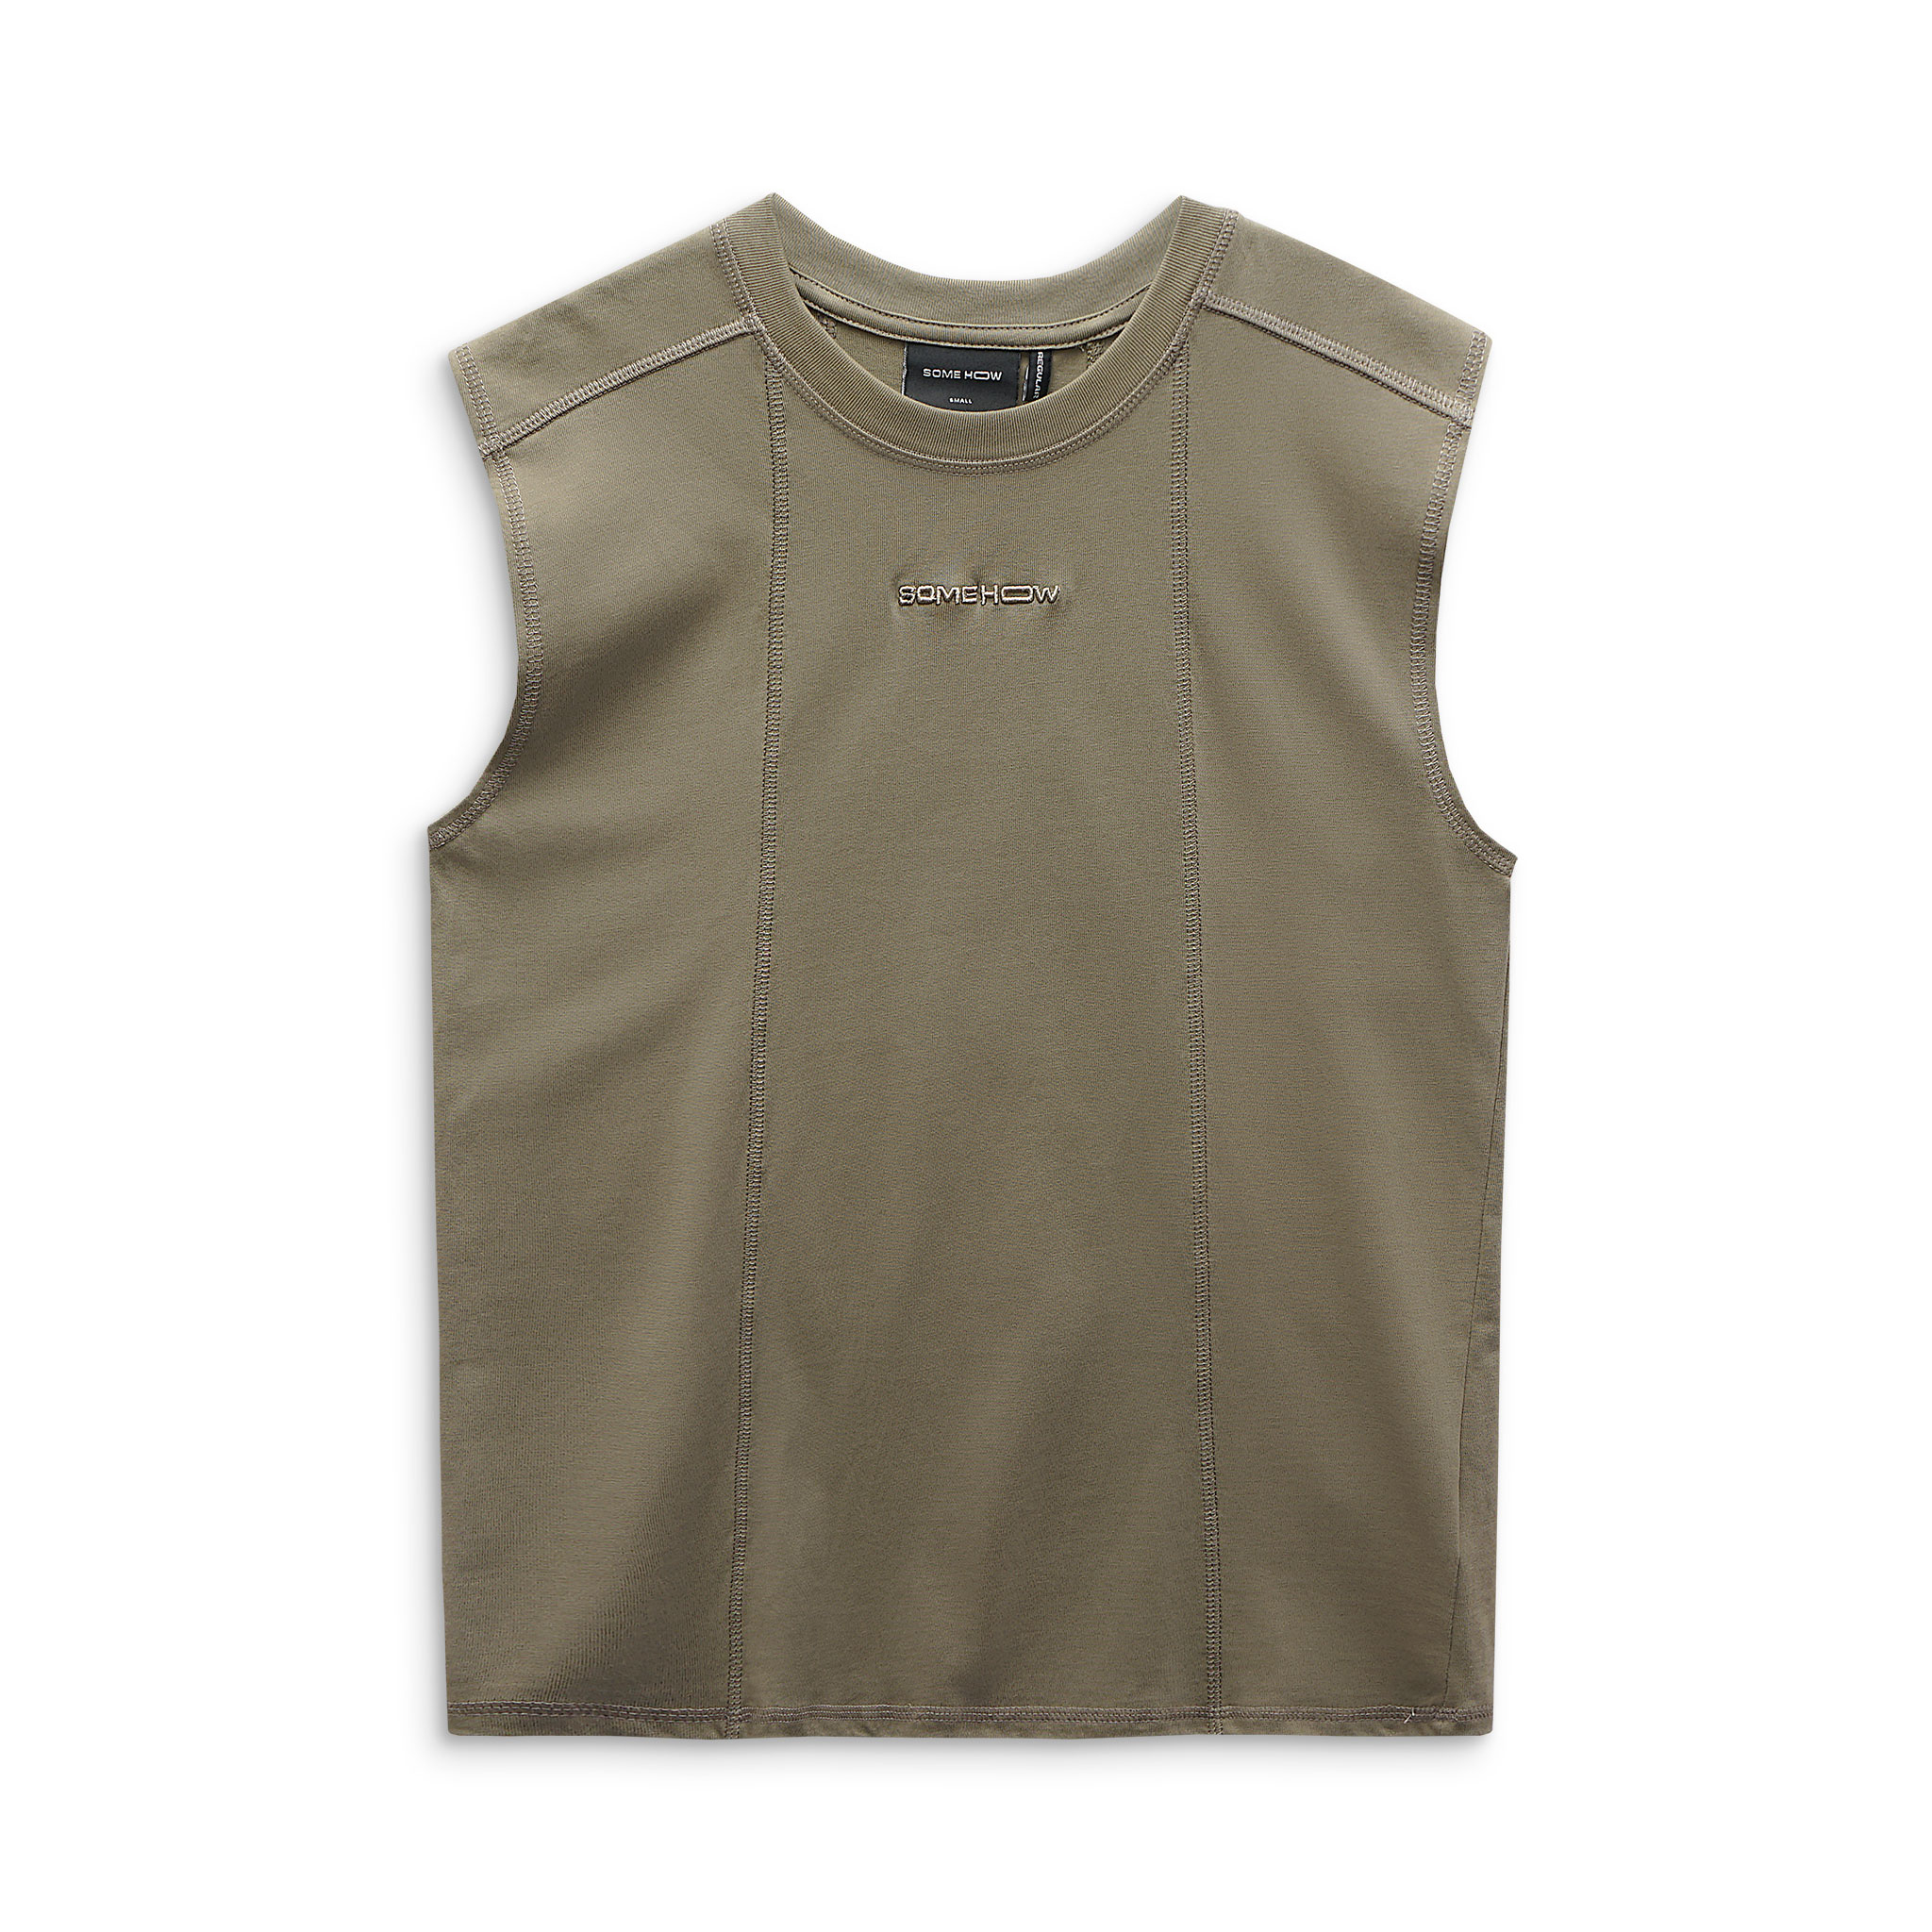 Áo Tanktop Nam Basic Wear, Chất Vải Cotton Thoải Mái, TT0001, SOMEHOW